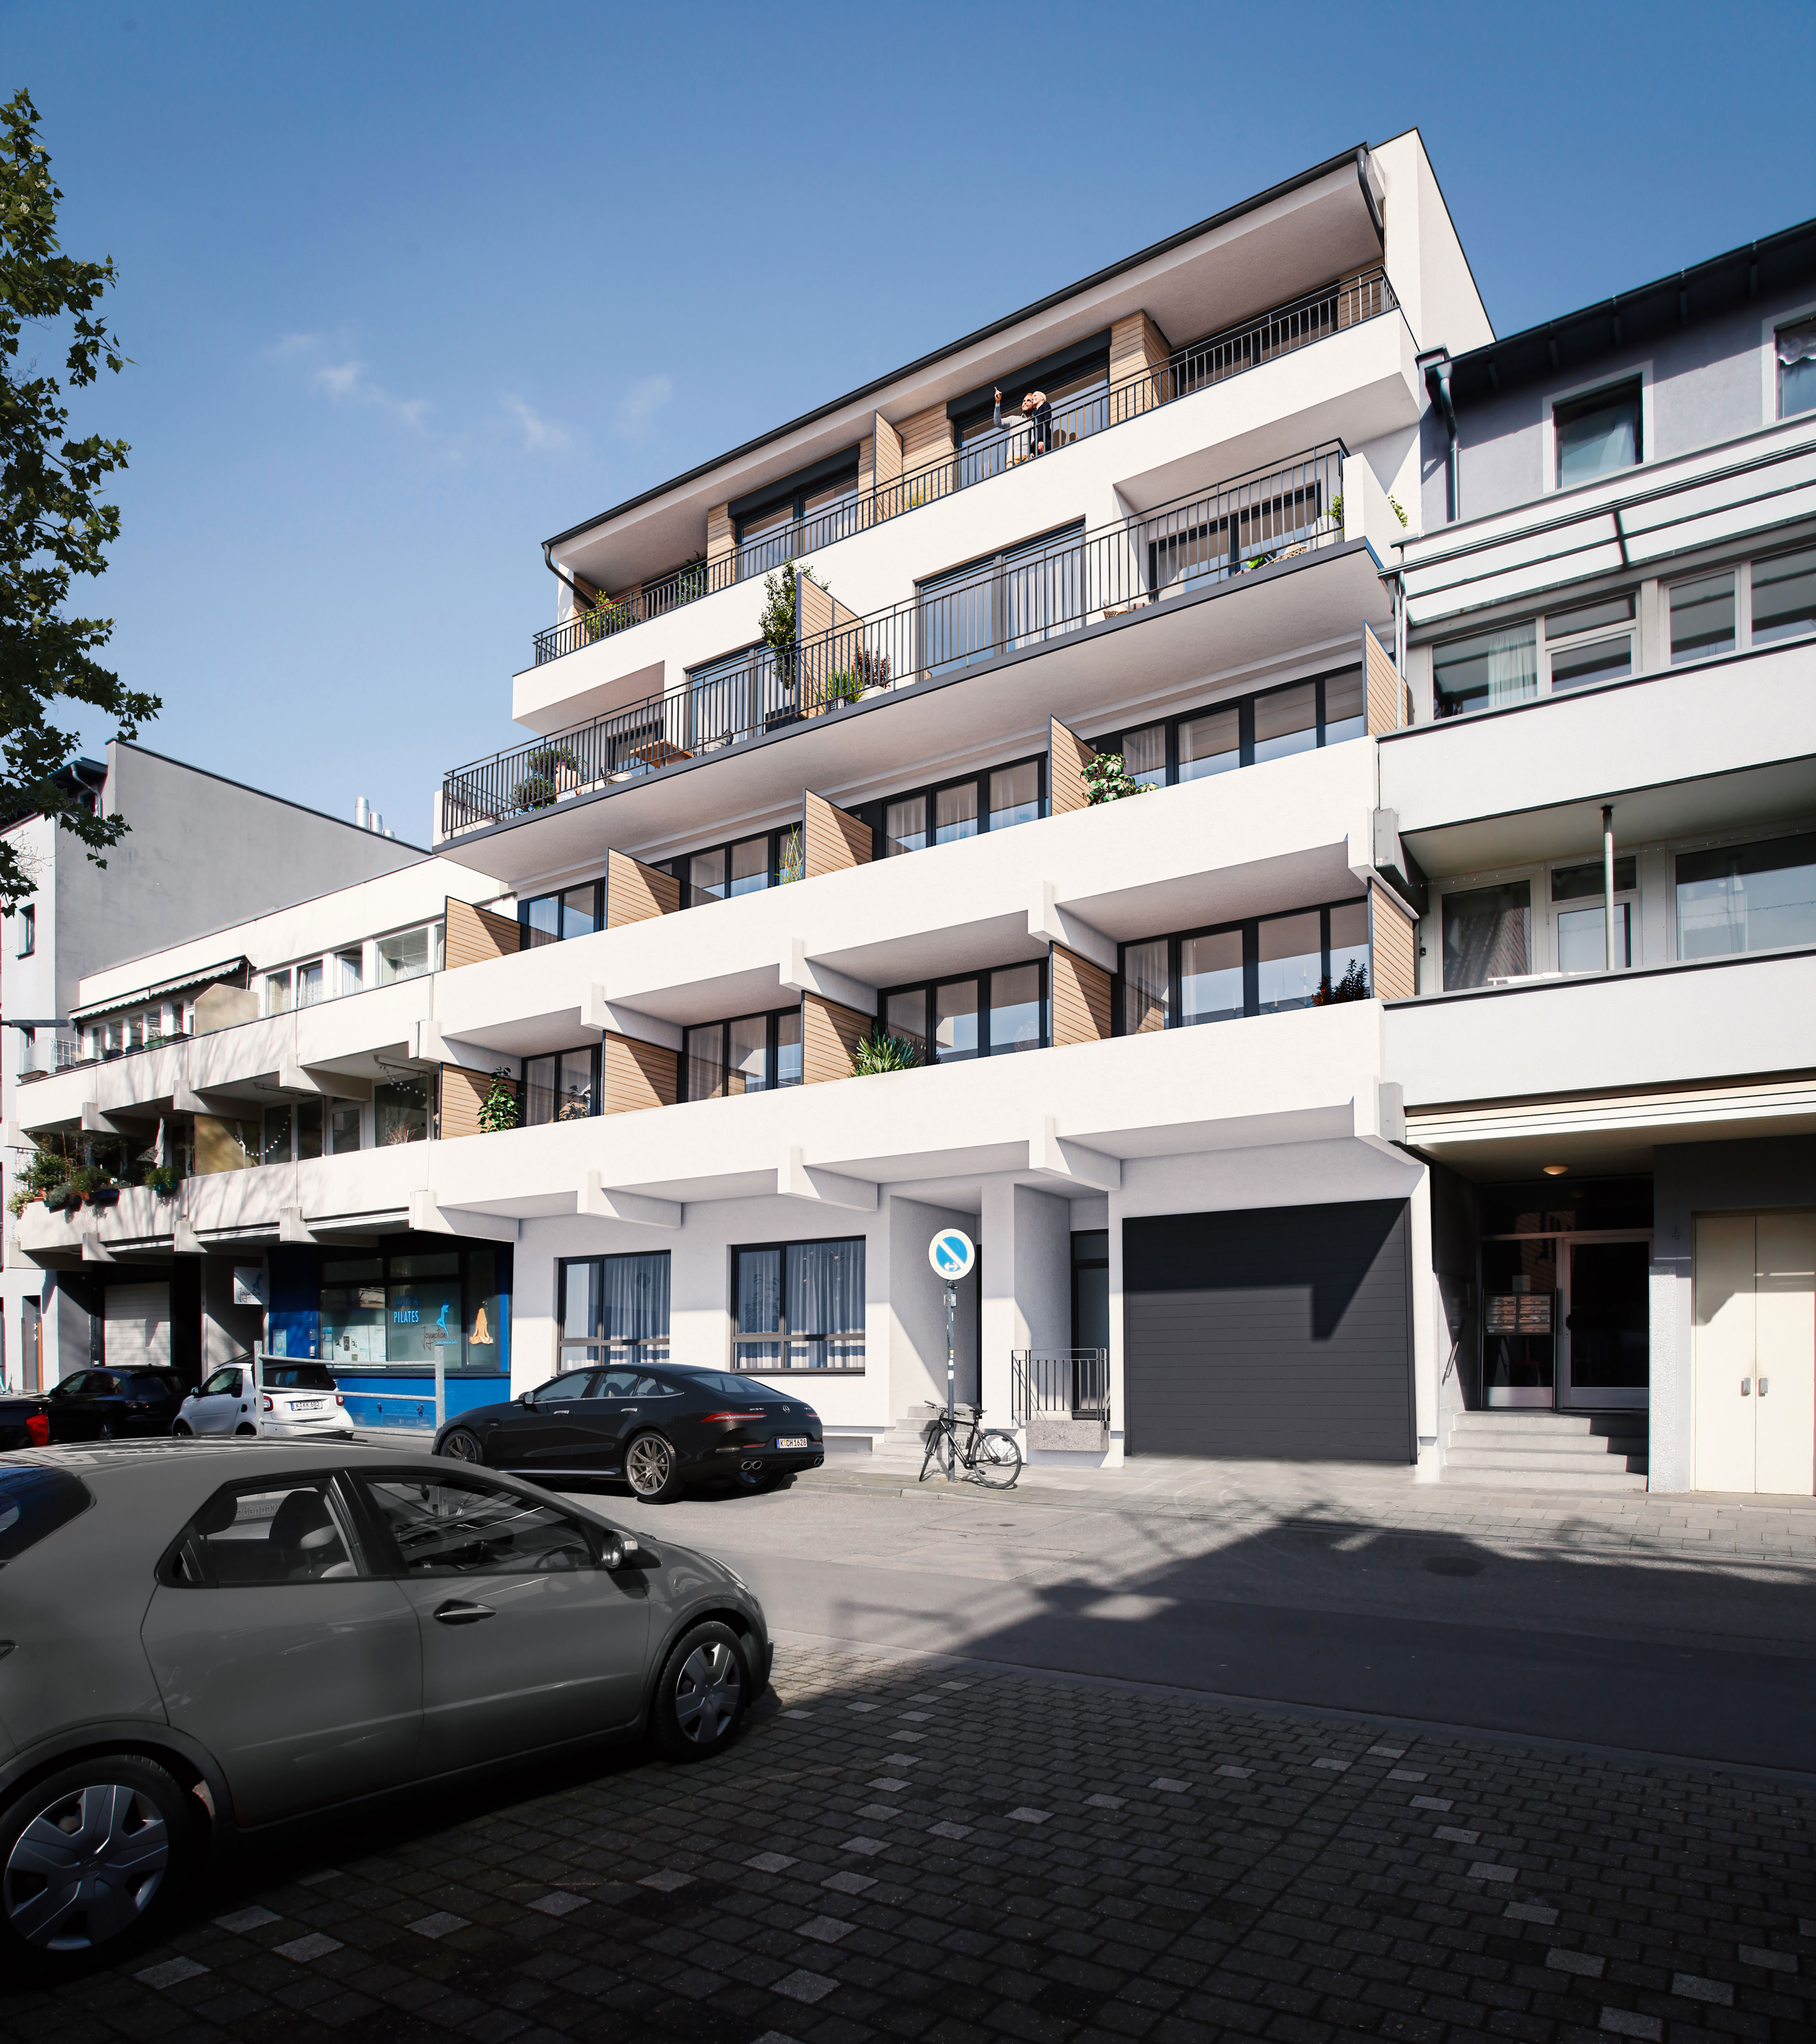 WvM_Immobilien_Wohnung_kaufen_in_Köln_Zollstock_Hof.jpg
				